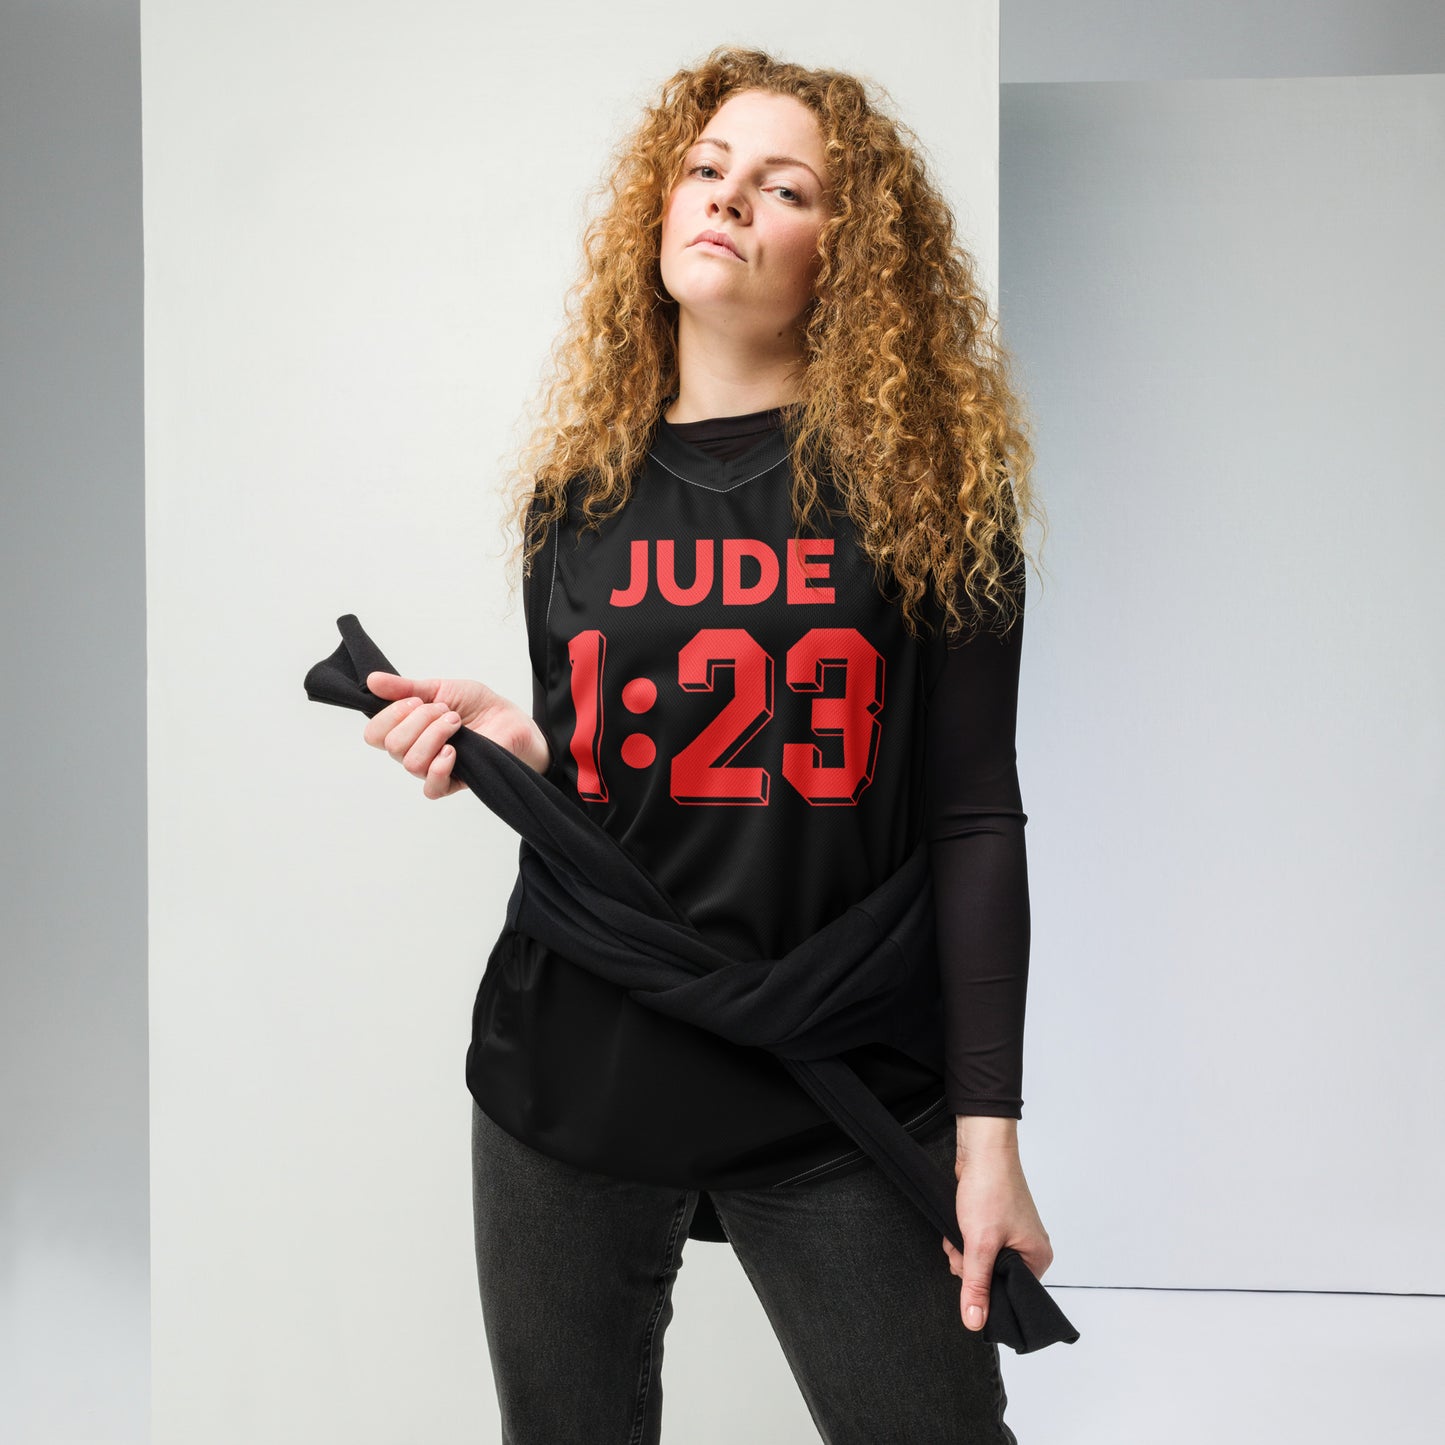 JUDE 1:23 Recycled Fibers ♻️ unisex basketball jersey